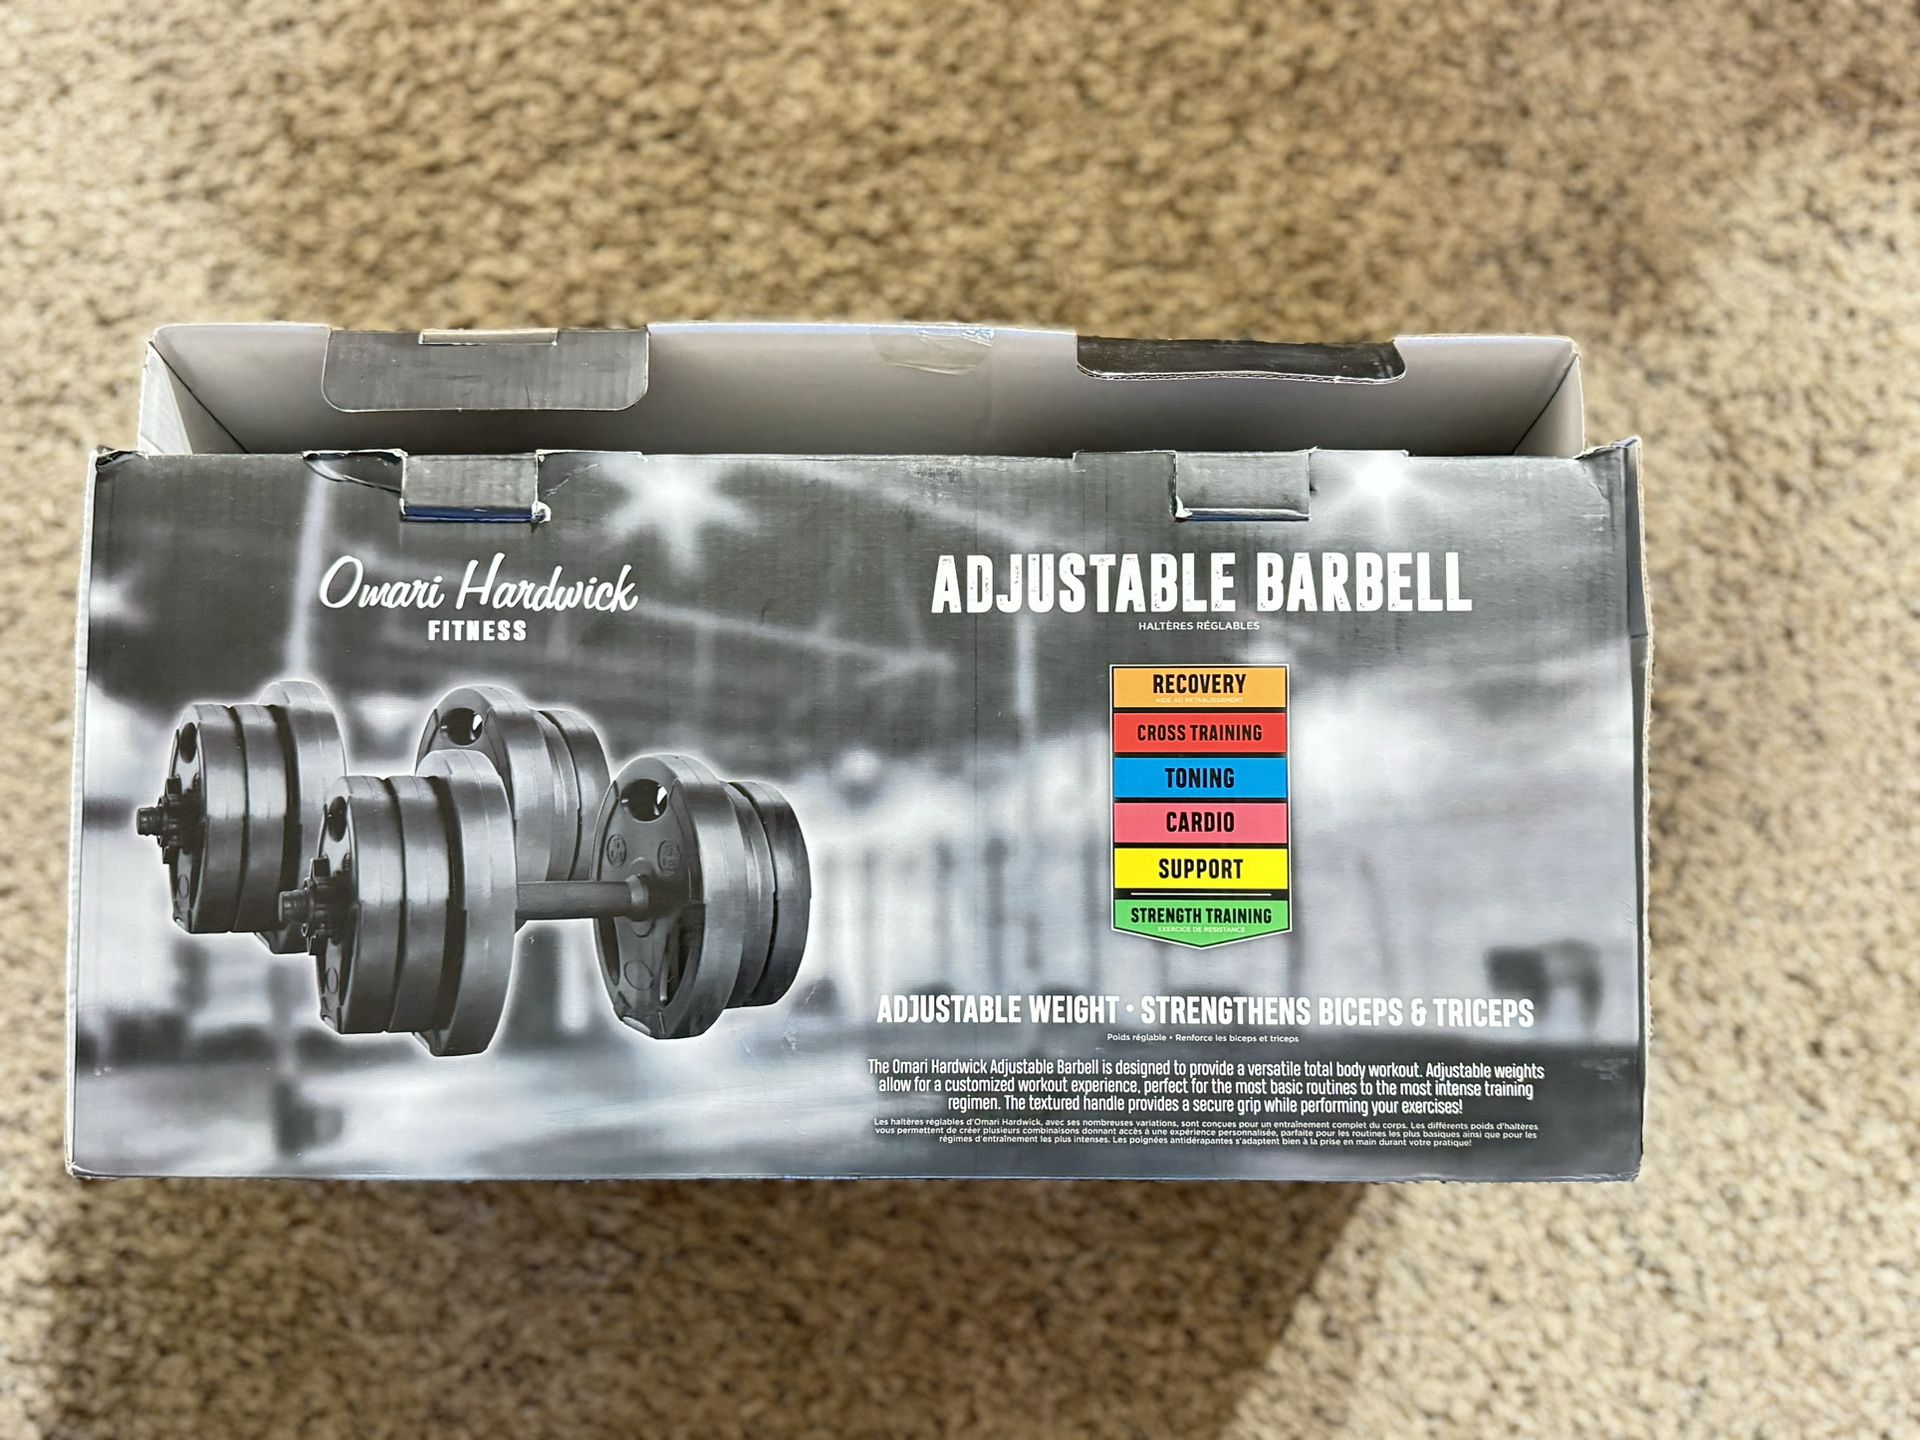 Adjustable Barbell